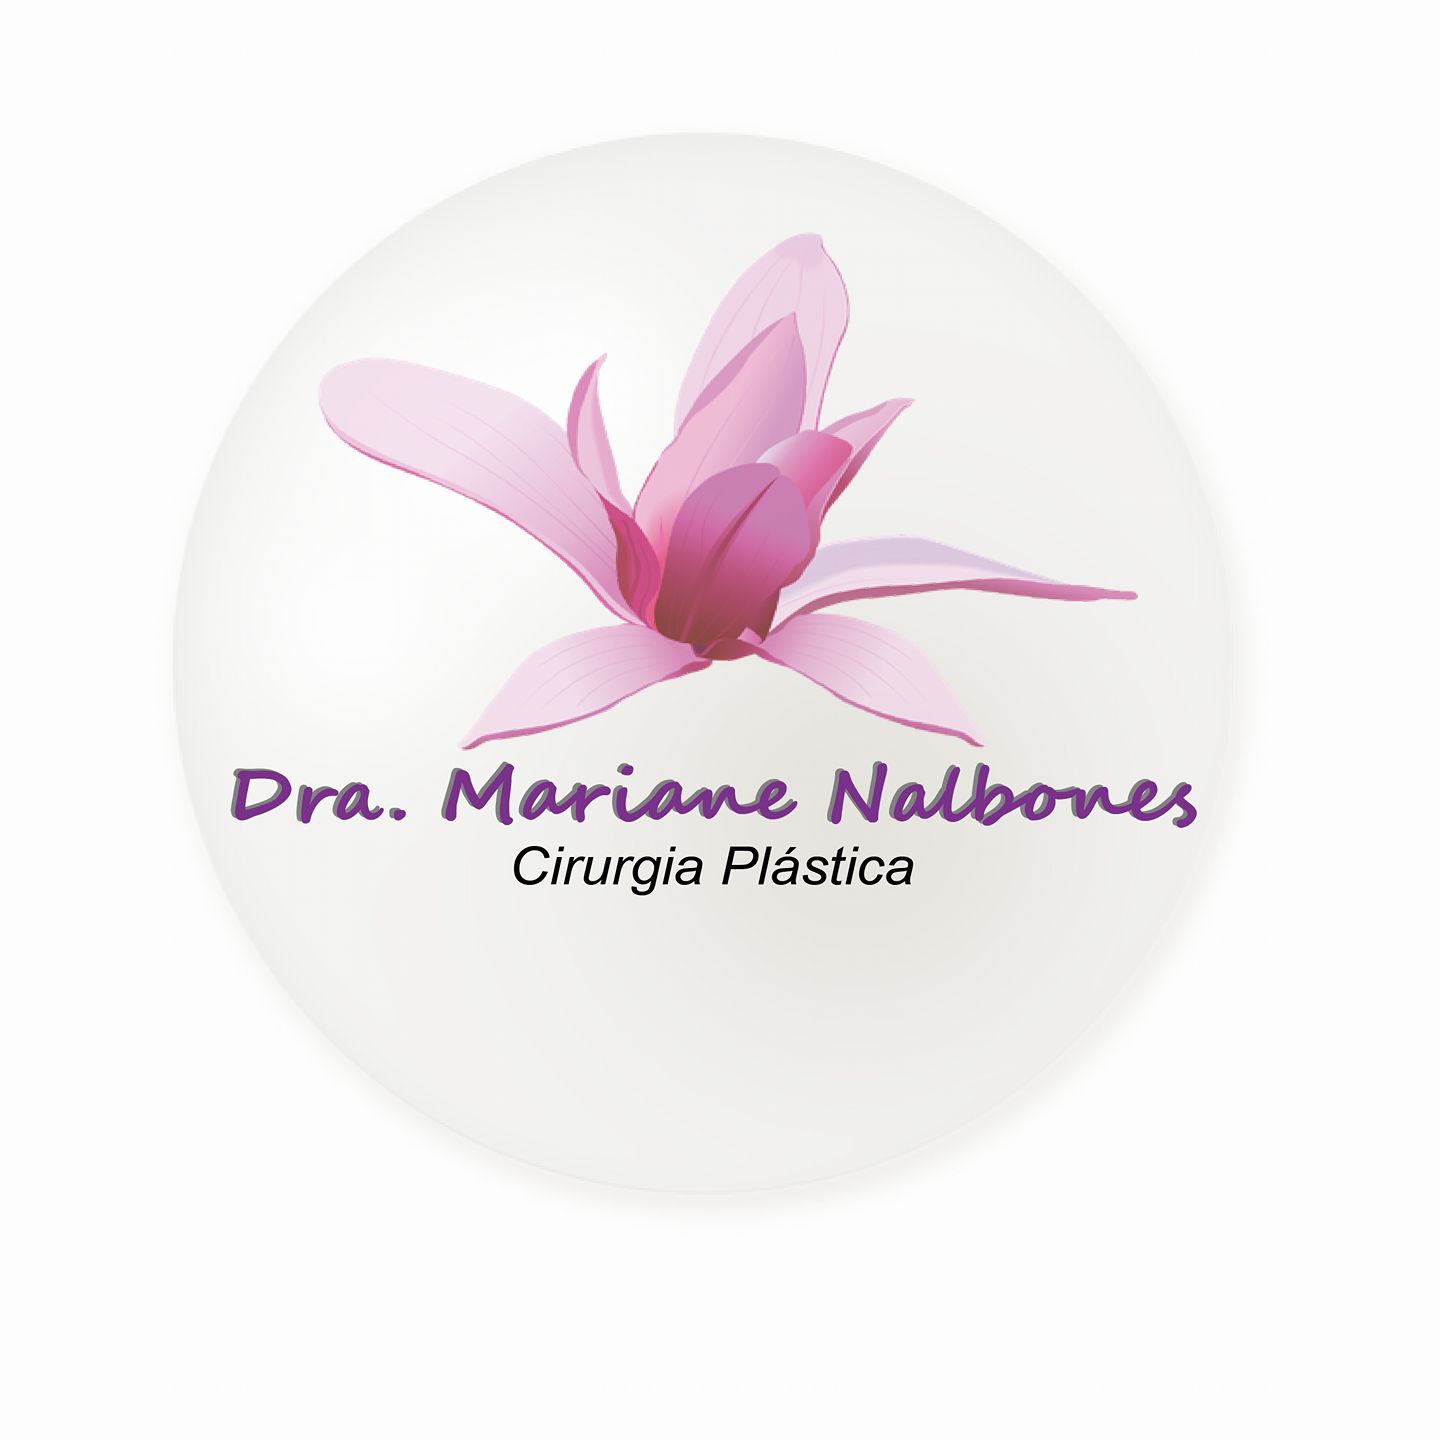 DRA. MARIANE NALBONES - CIRURGIA PLÁSTICA - Clínicas de Cirurgia Plástica - Rio de Janeiro, RJ